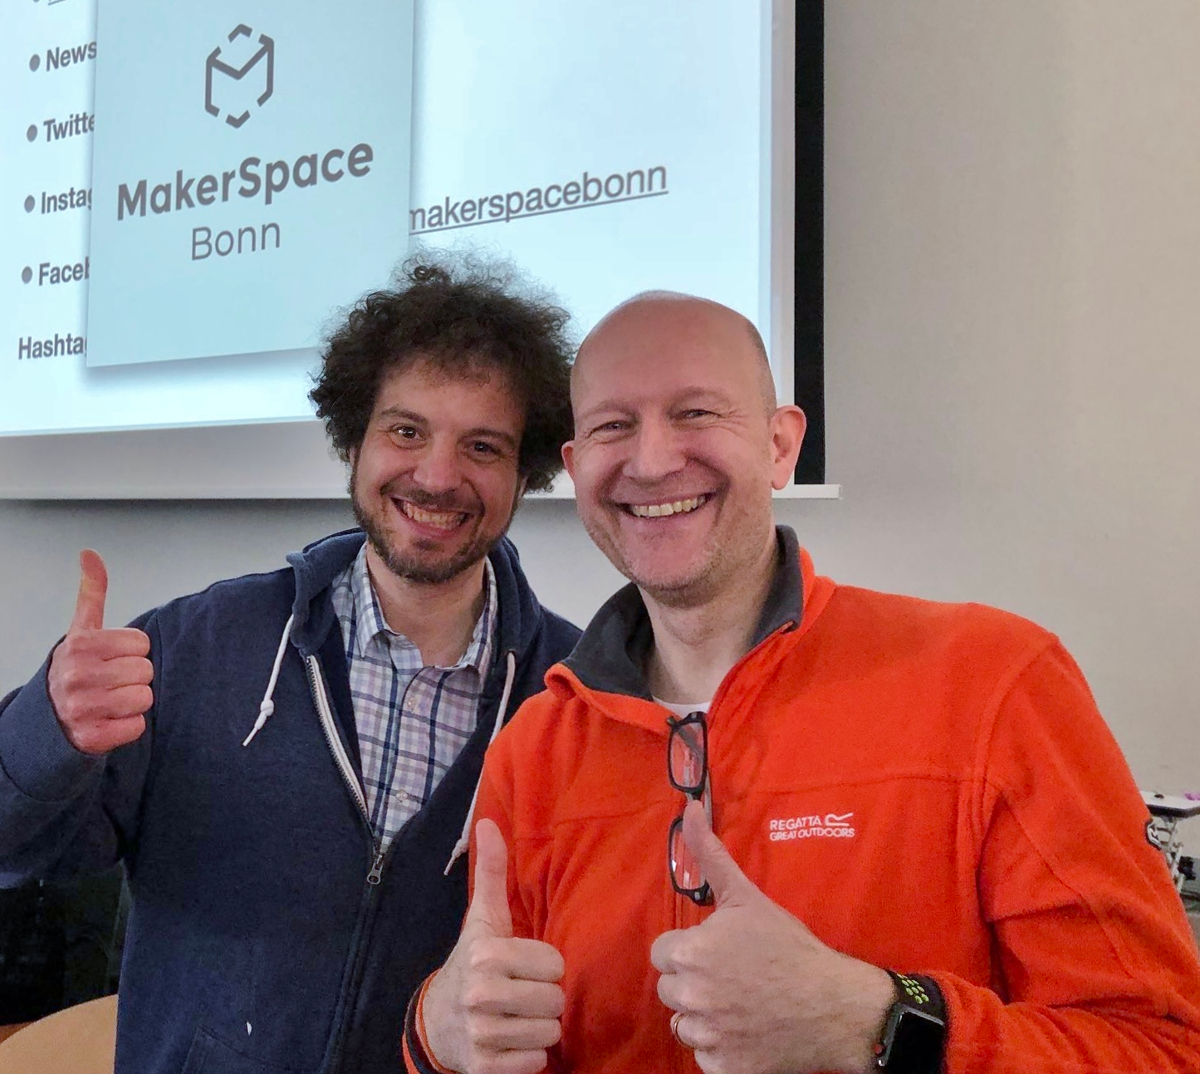 Einfach mal machen: MakerSpace Bonn